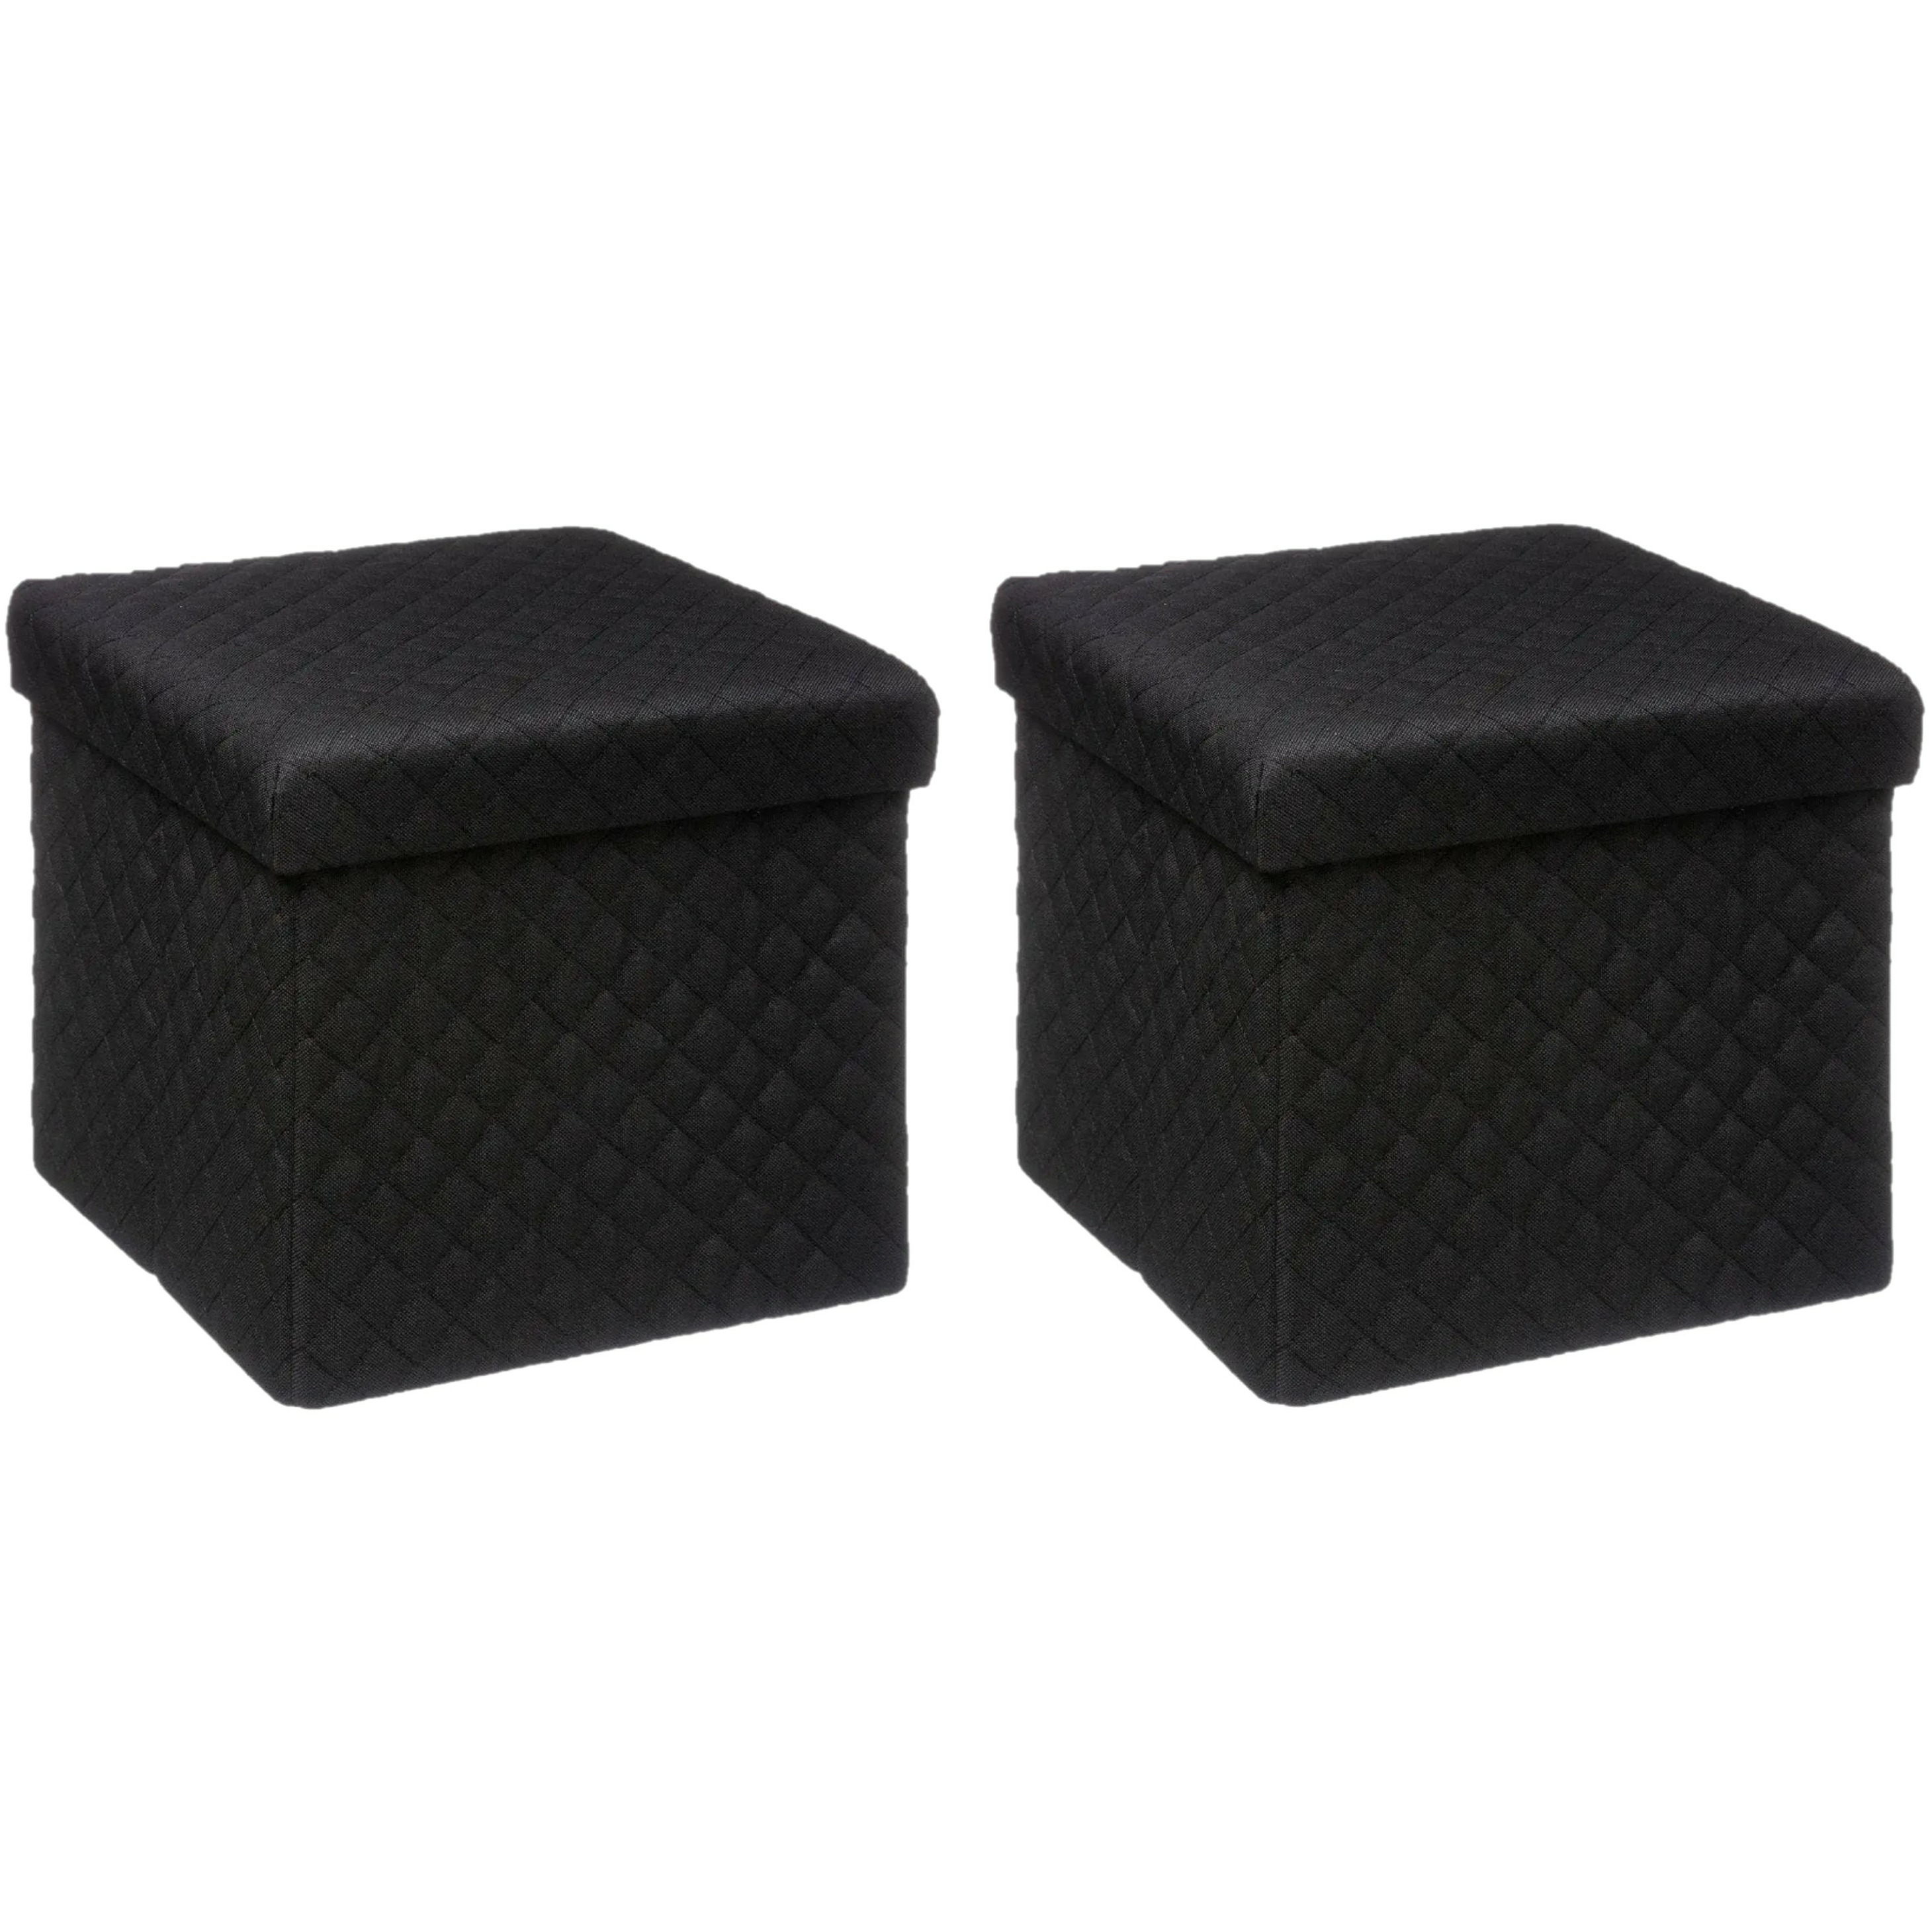 5Five Poef-Hocker-opbergbox 2x zwart polyester-mdf 31 x 31 cm